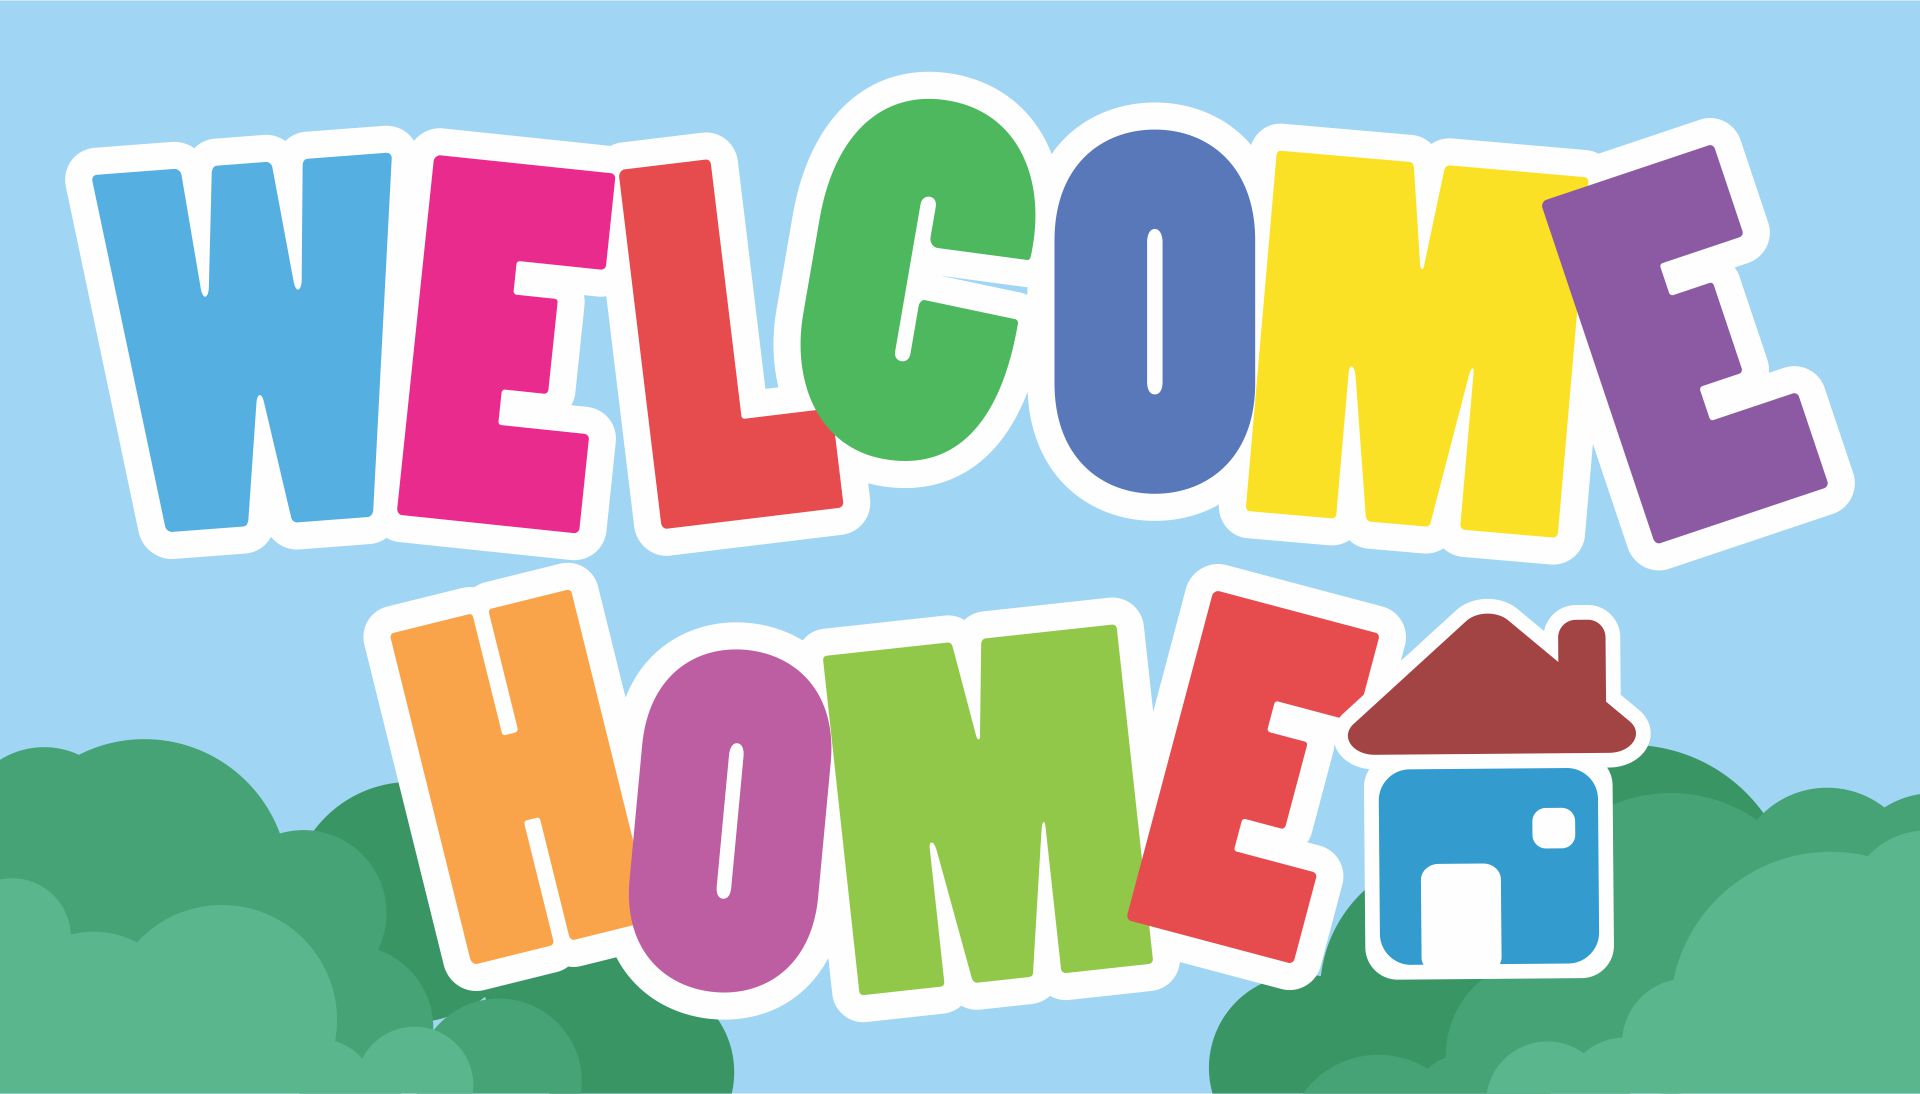 Free Printable Welcome Home Sign